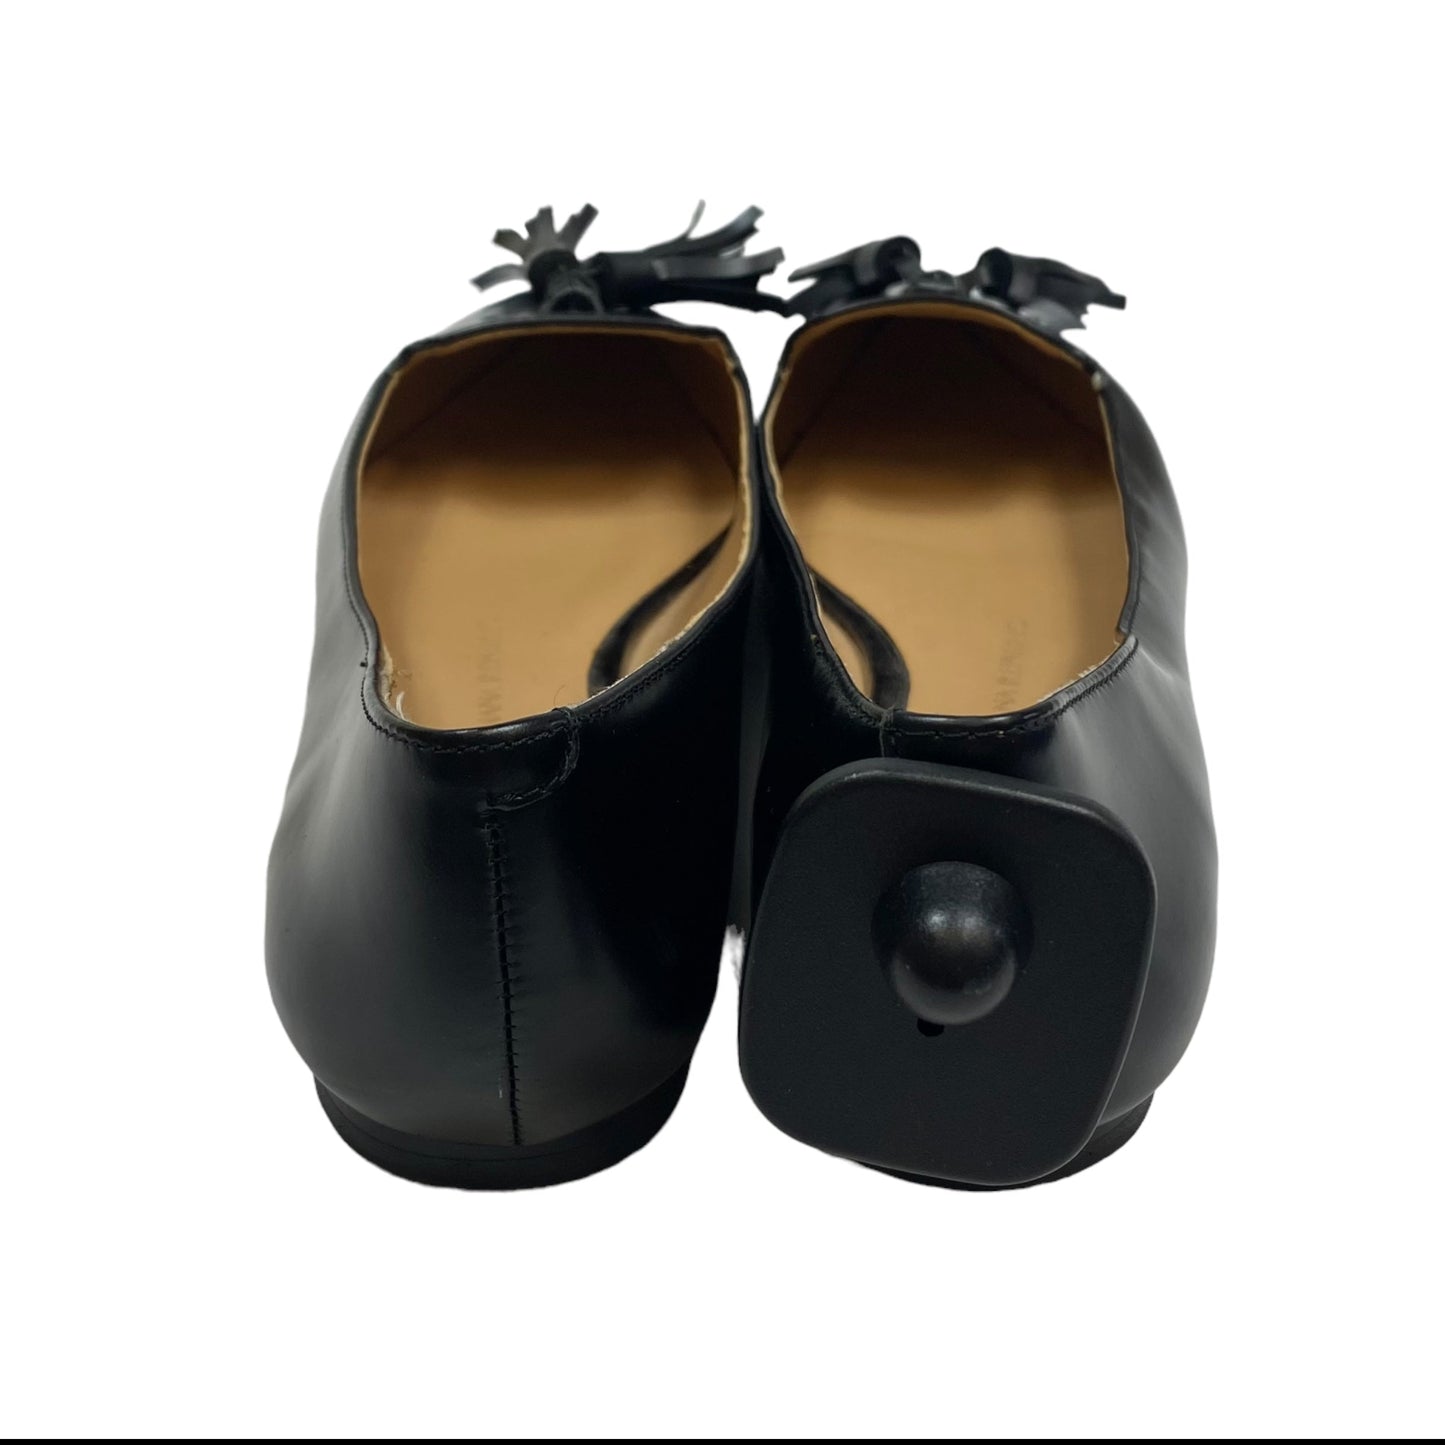 Black Shoes Flats Banana Republic, Size 6.5